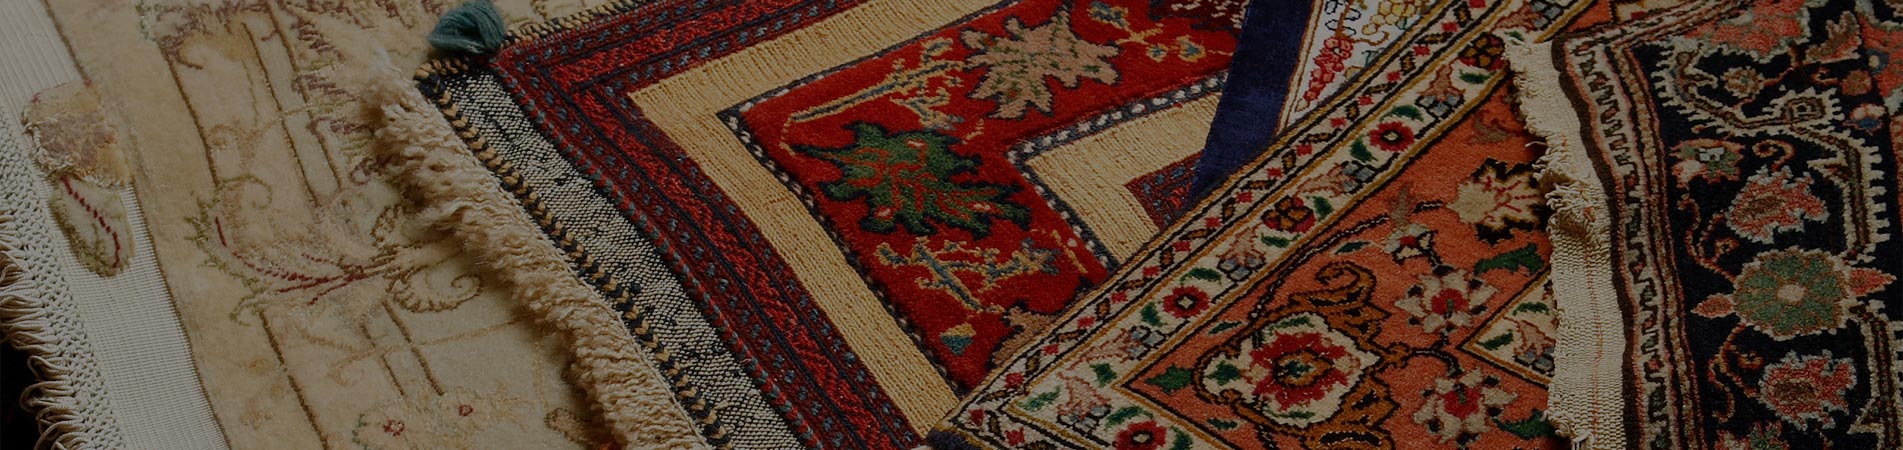 Prayer rug